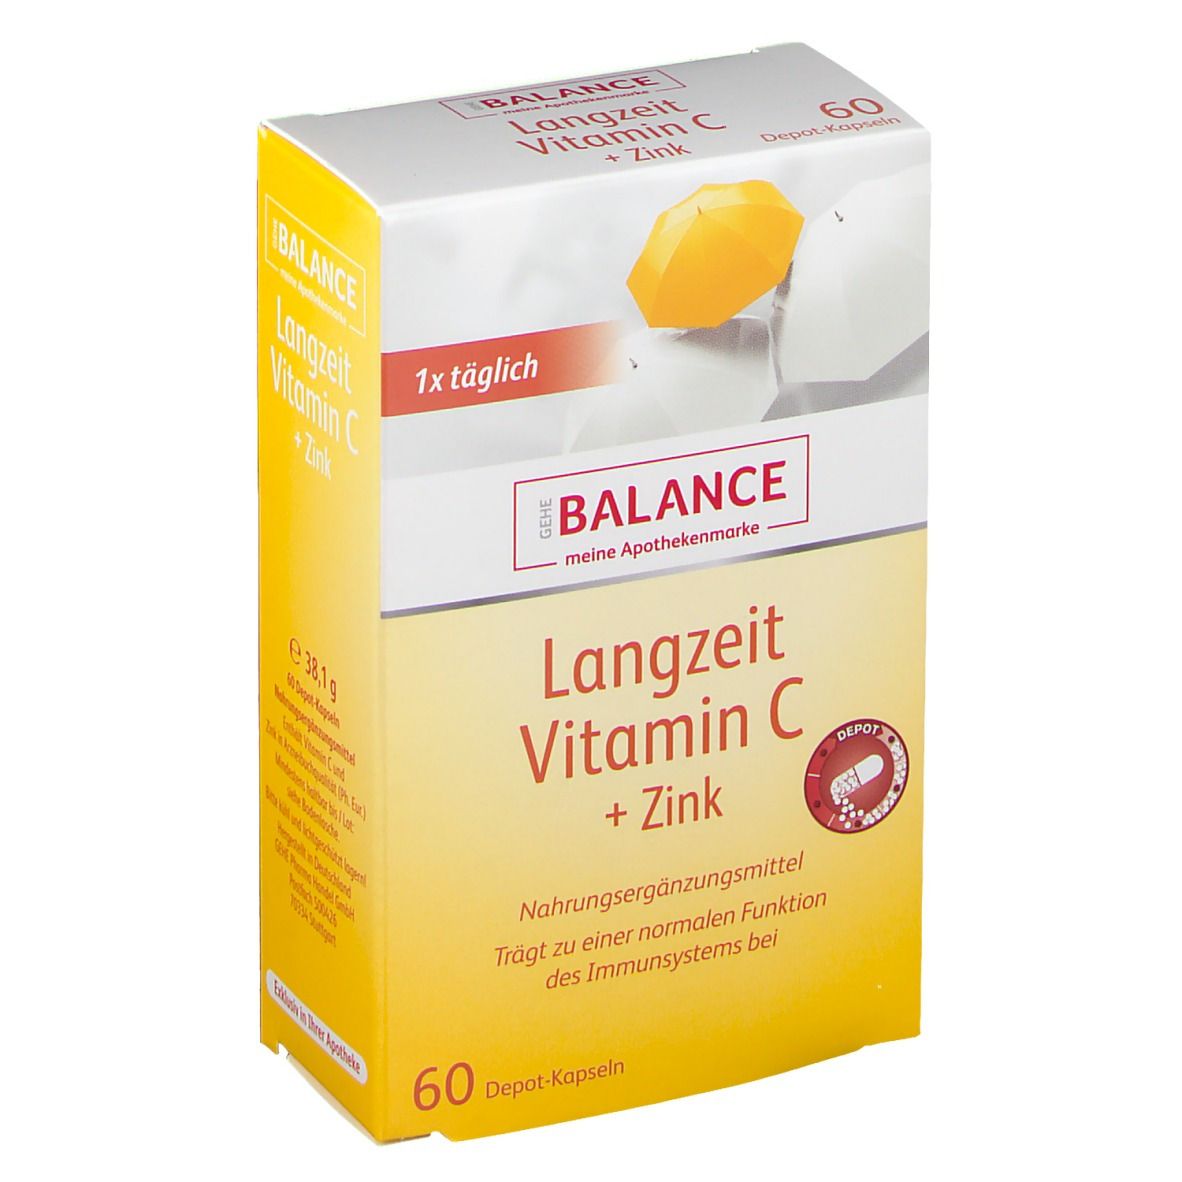 GEHE BALANCE Langzeit Vitamin C +  Zink Depot Retardkapseln